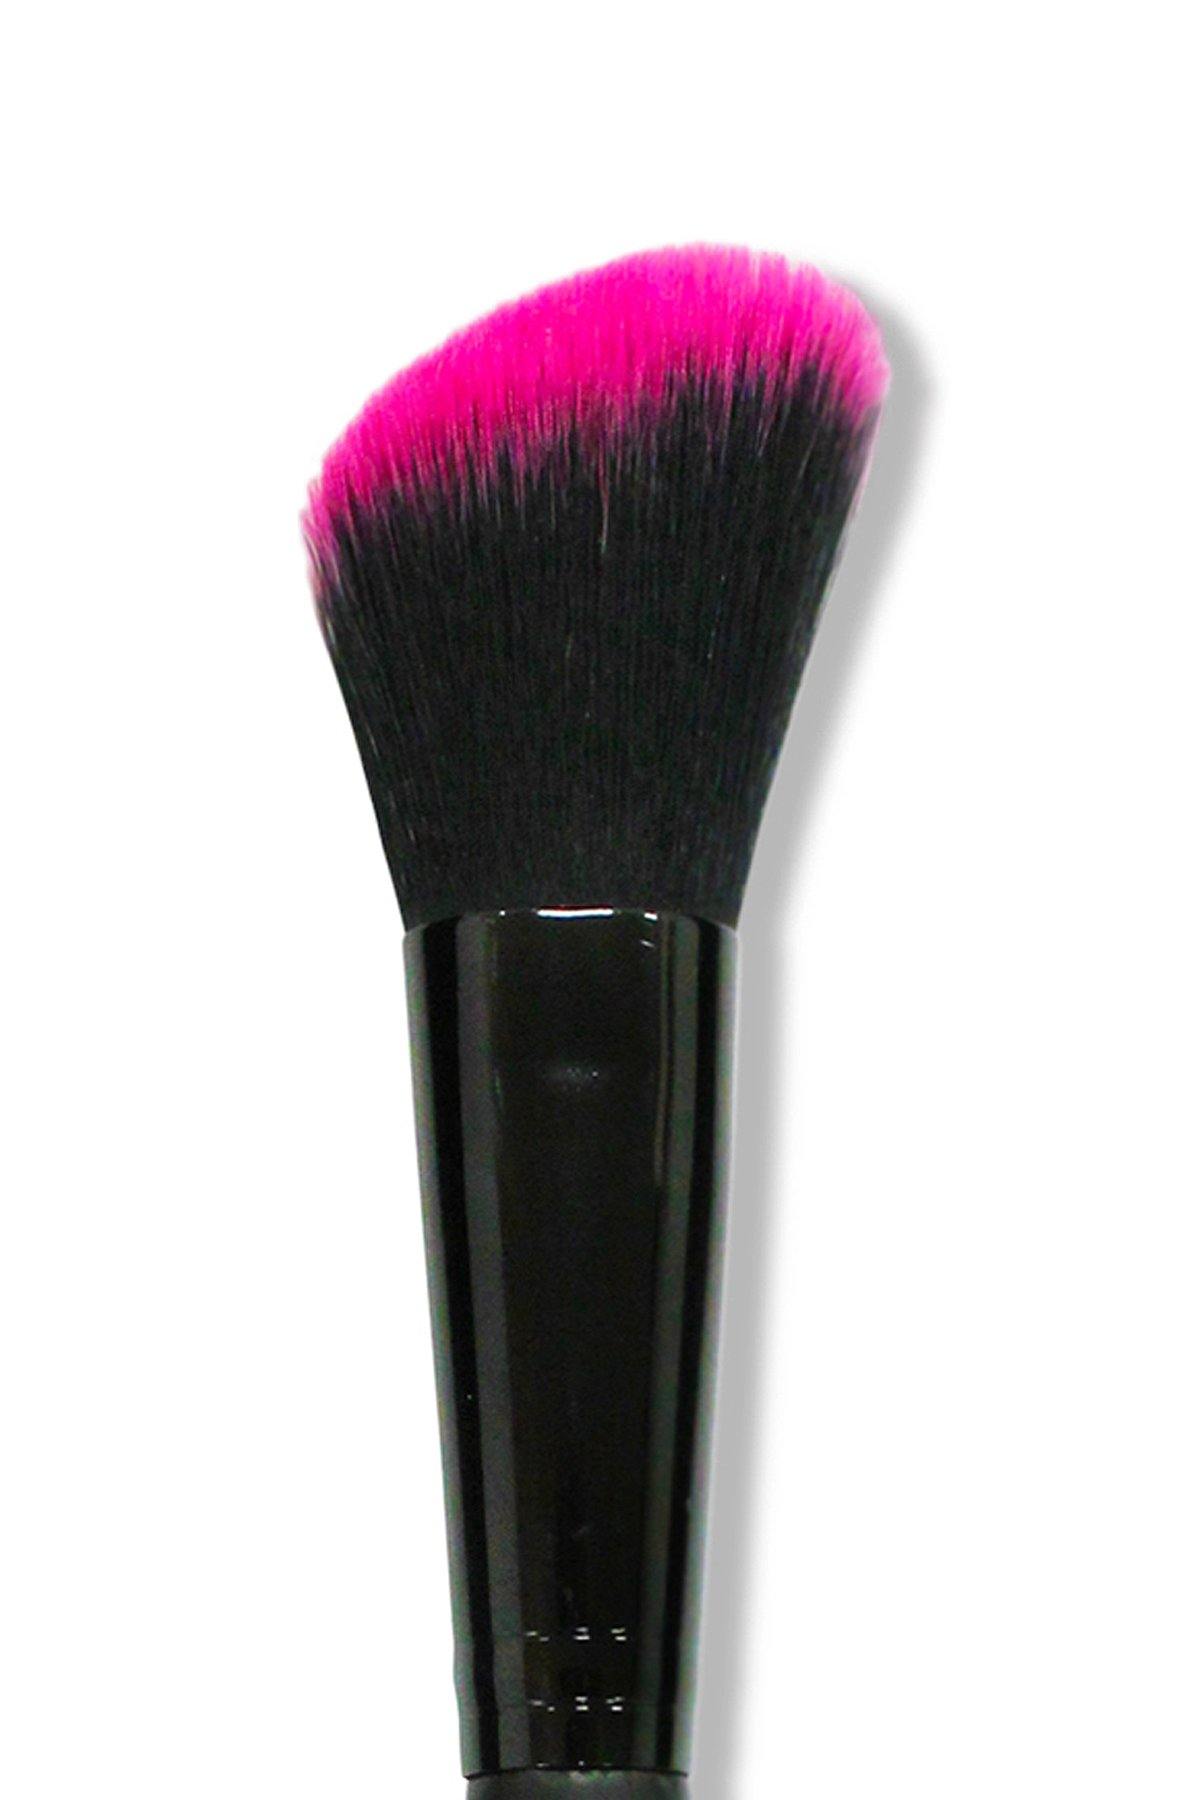 Blush Brush - Natural Brown – Blend Mineral Cosmetics